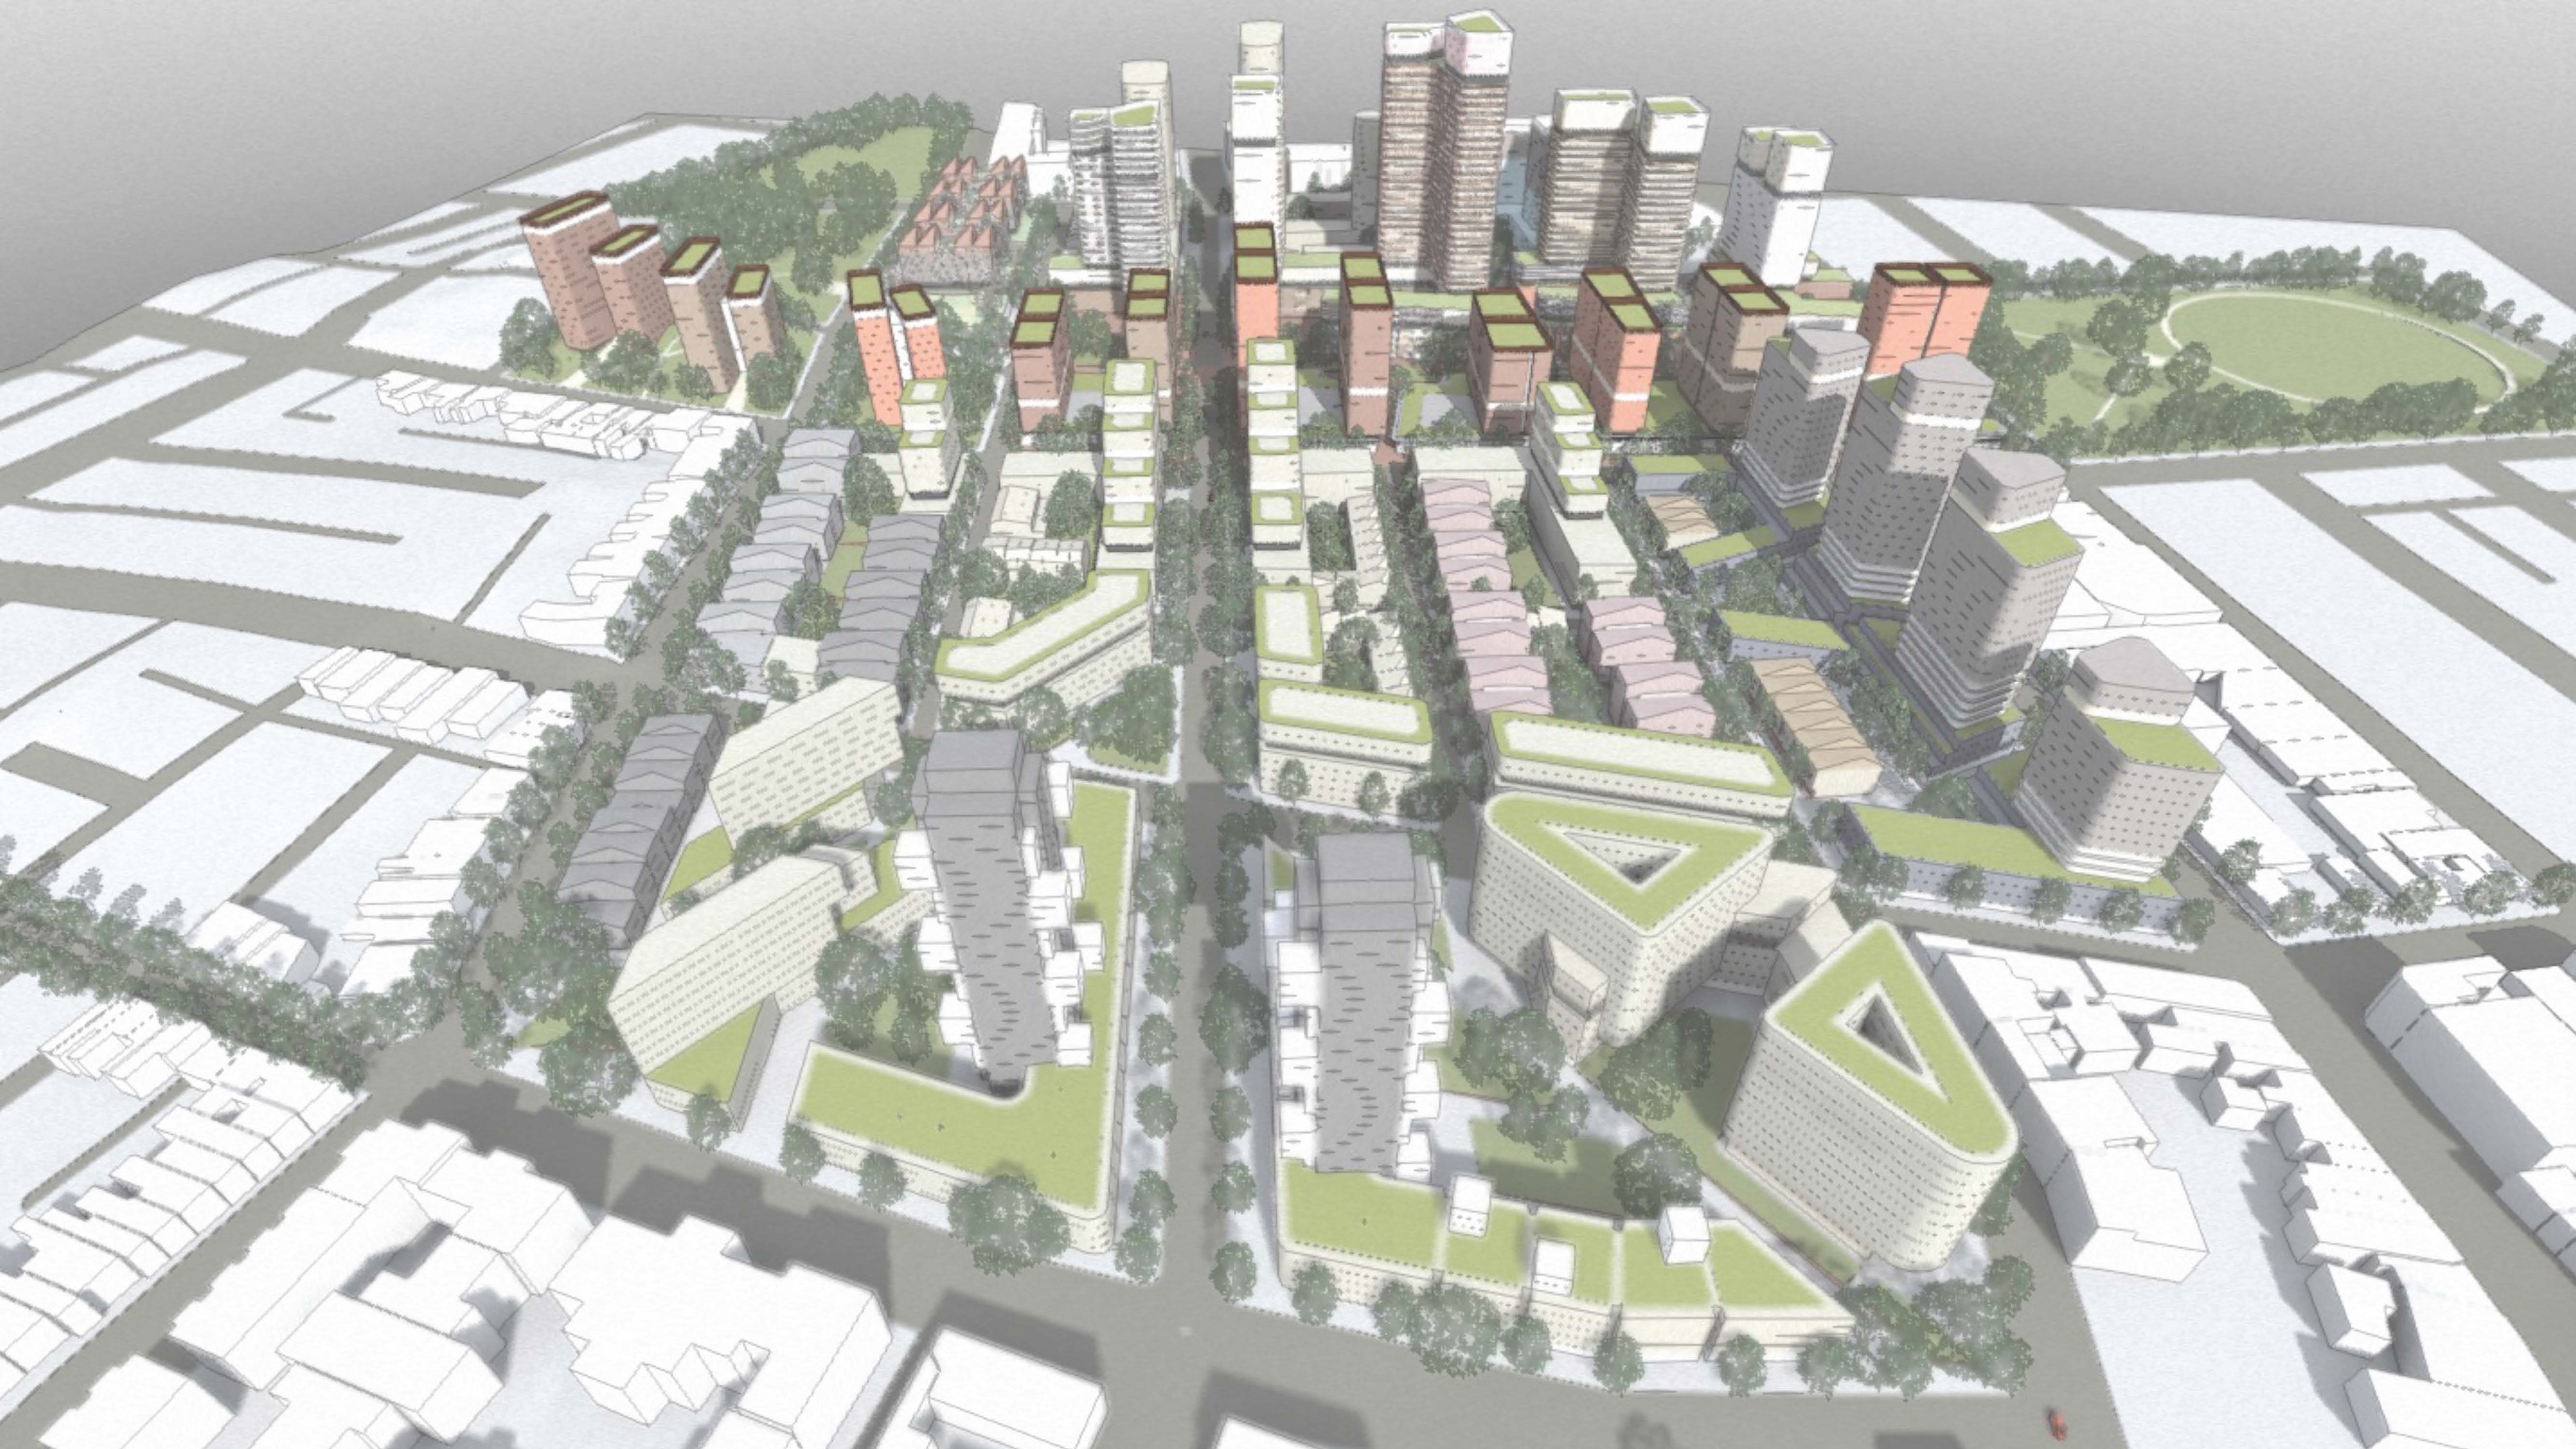 Urban Planning And Design Of Urban Cities | emr.ac.uk